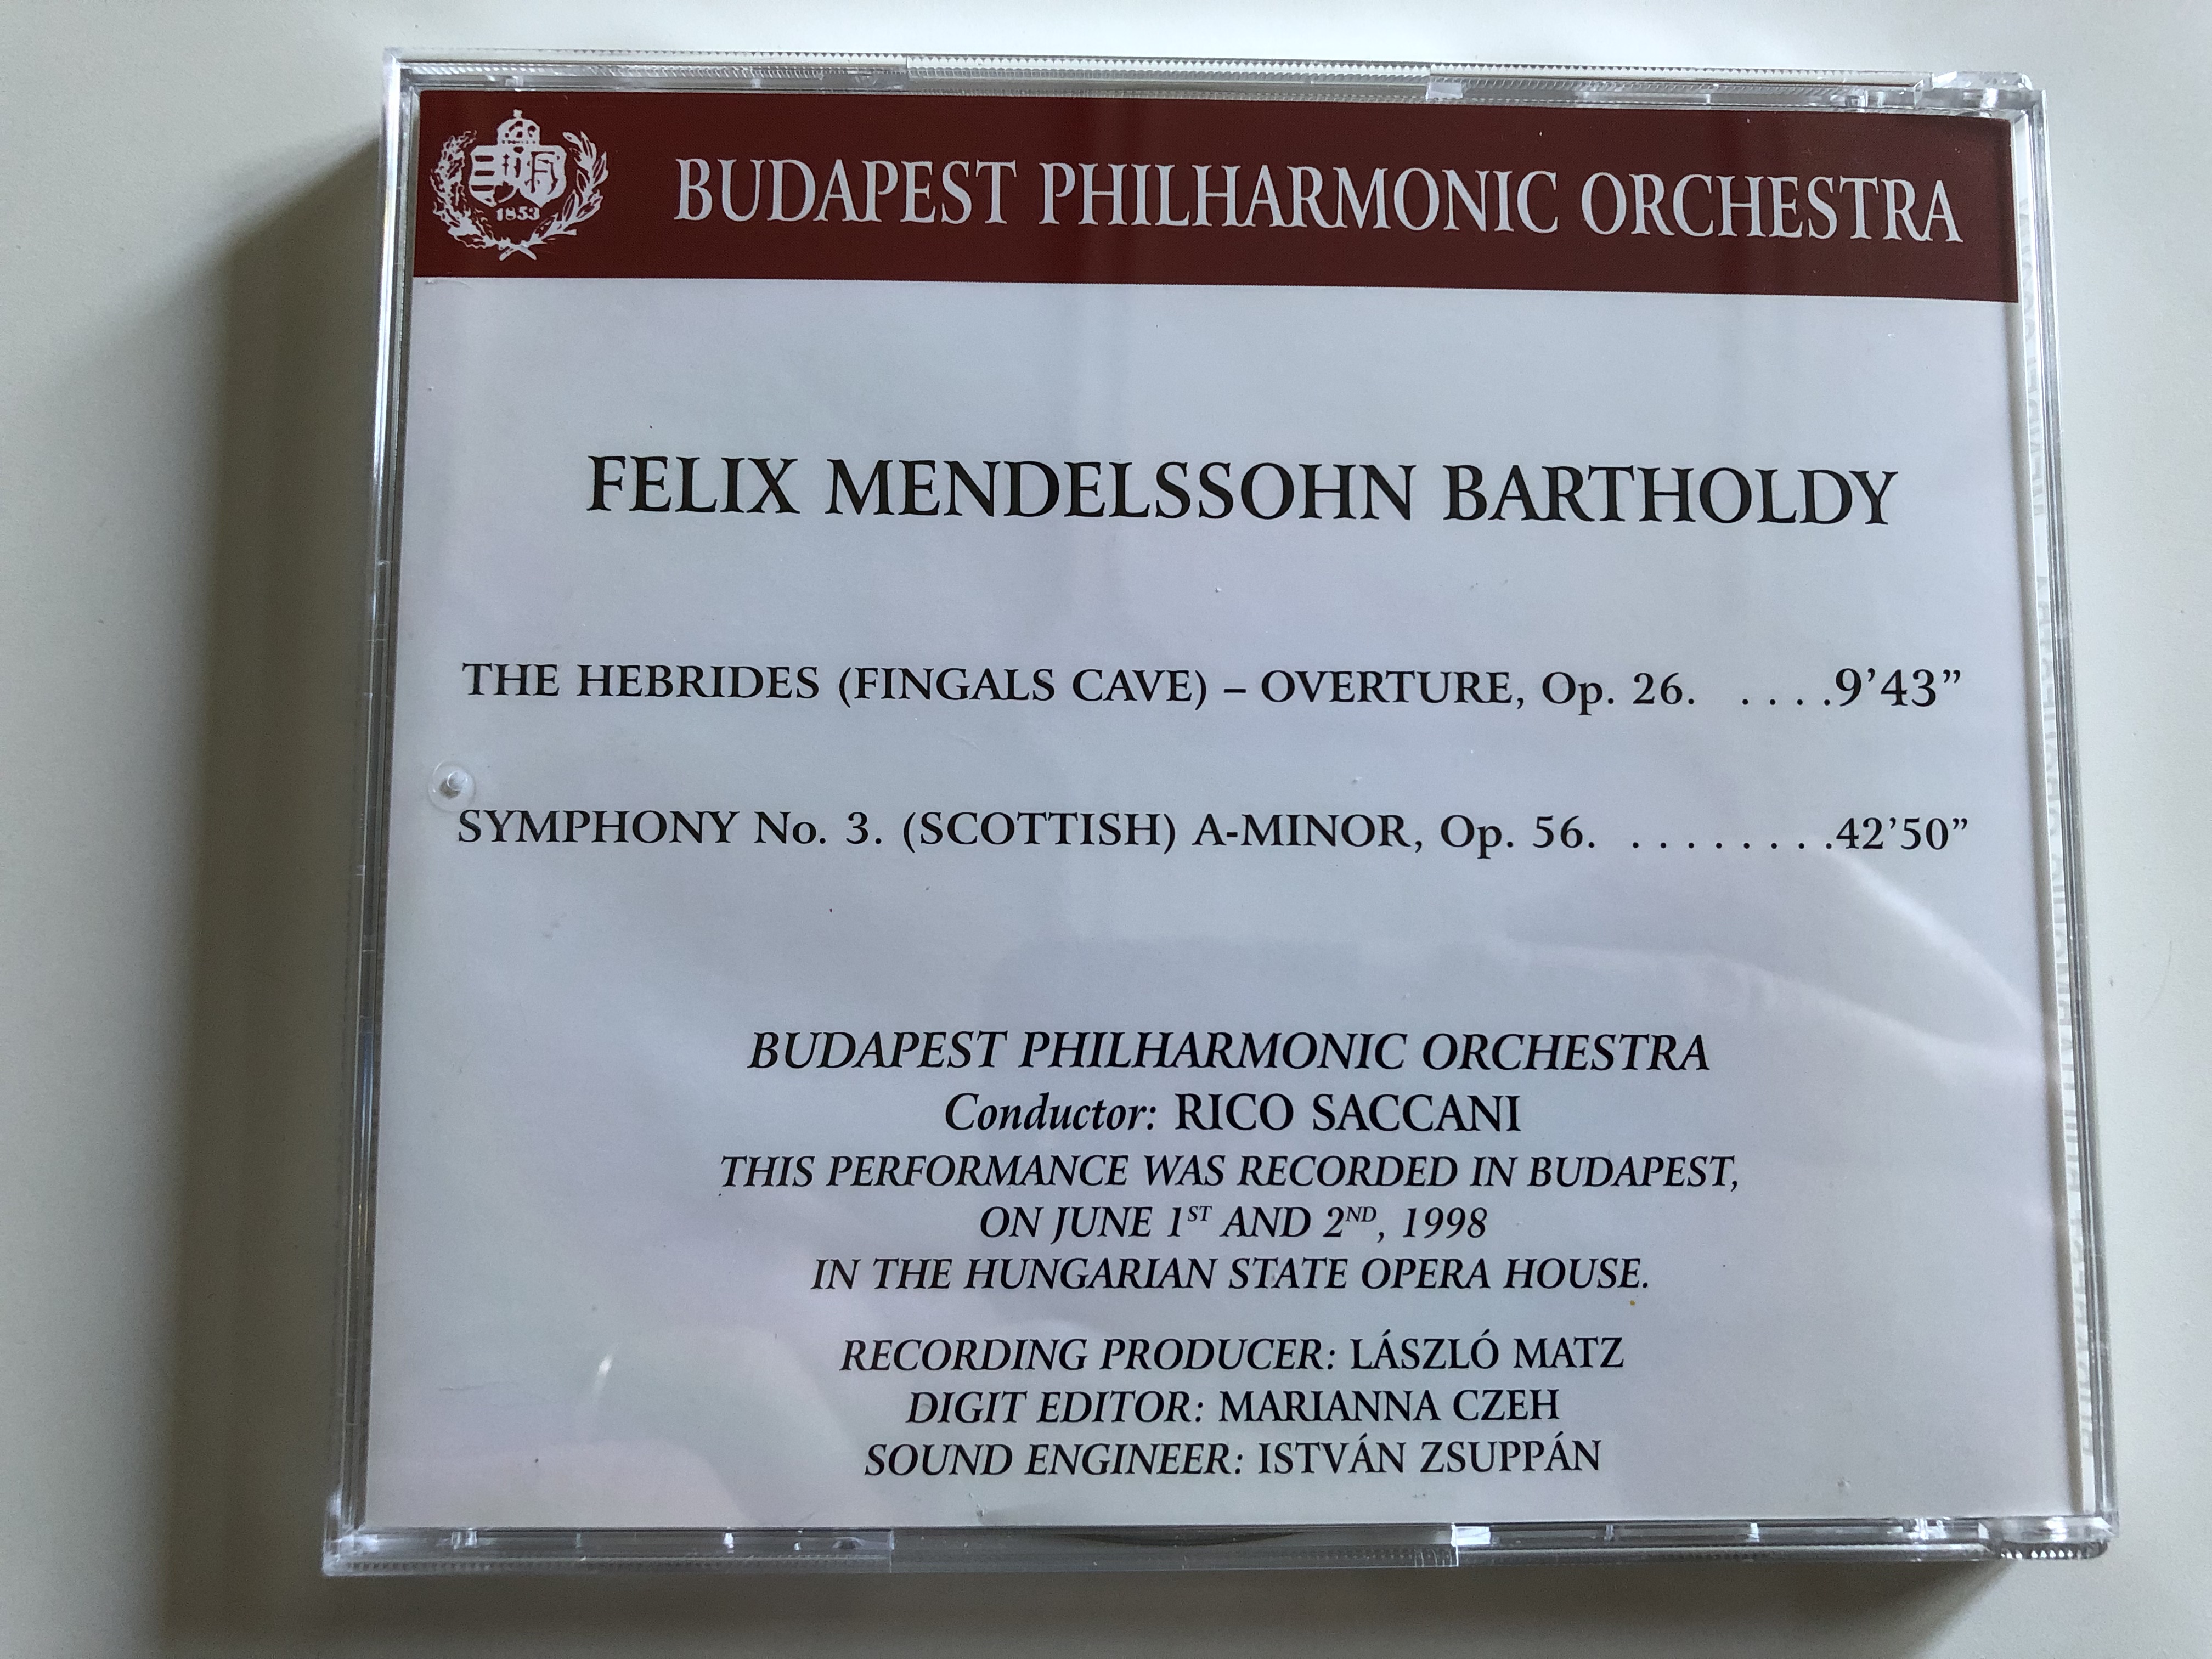 budapest-philharmonic-orchestra-conducted-rico-saccani-felix-mendelssohn-bartholdy-the-hebrides-fingal-s-cave-overture-symphony-no.3-scottish-a-minor-vtcd-audio-cd-1998-bftz-003-1-9-.jpg